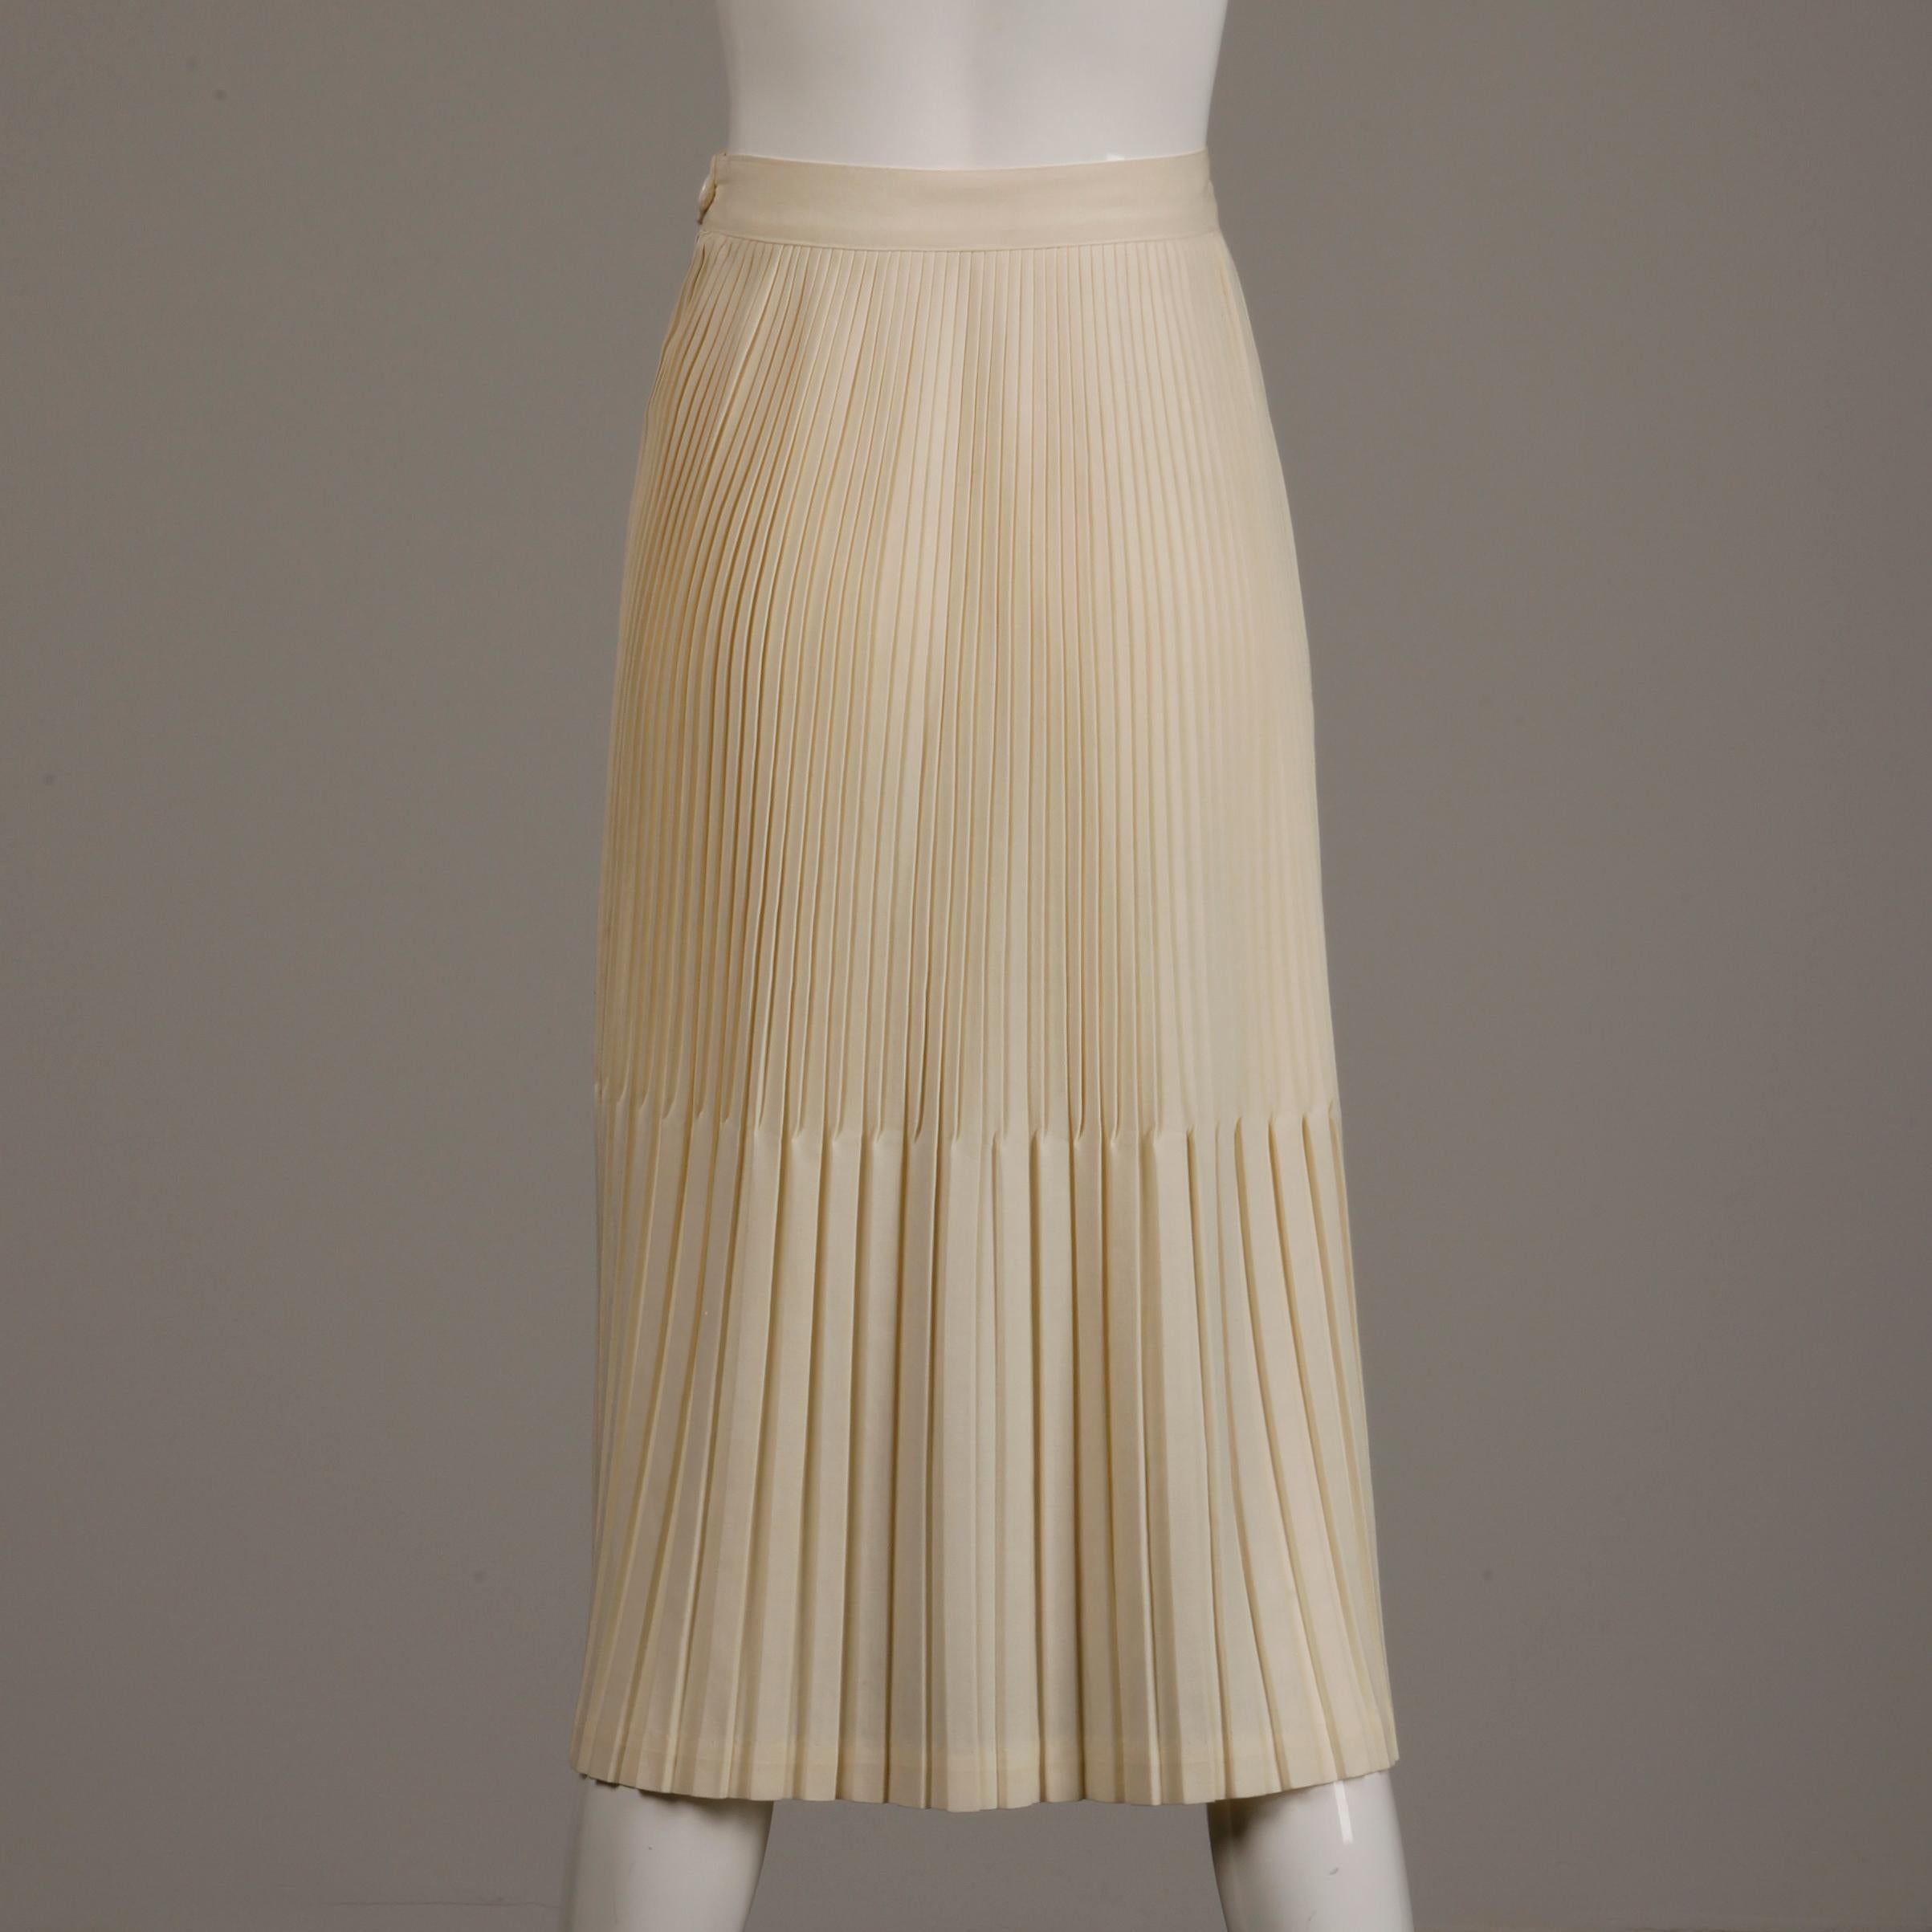 Women's 1940s Vintage Off White/ Cream Cotton Pleated High Waist Pencil Skirt